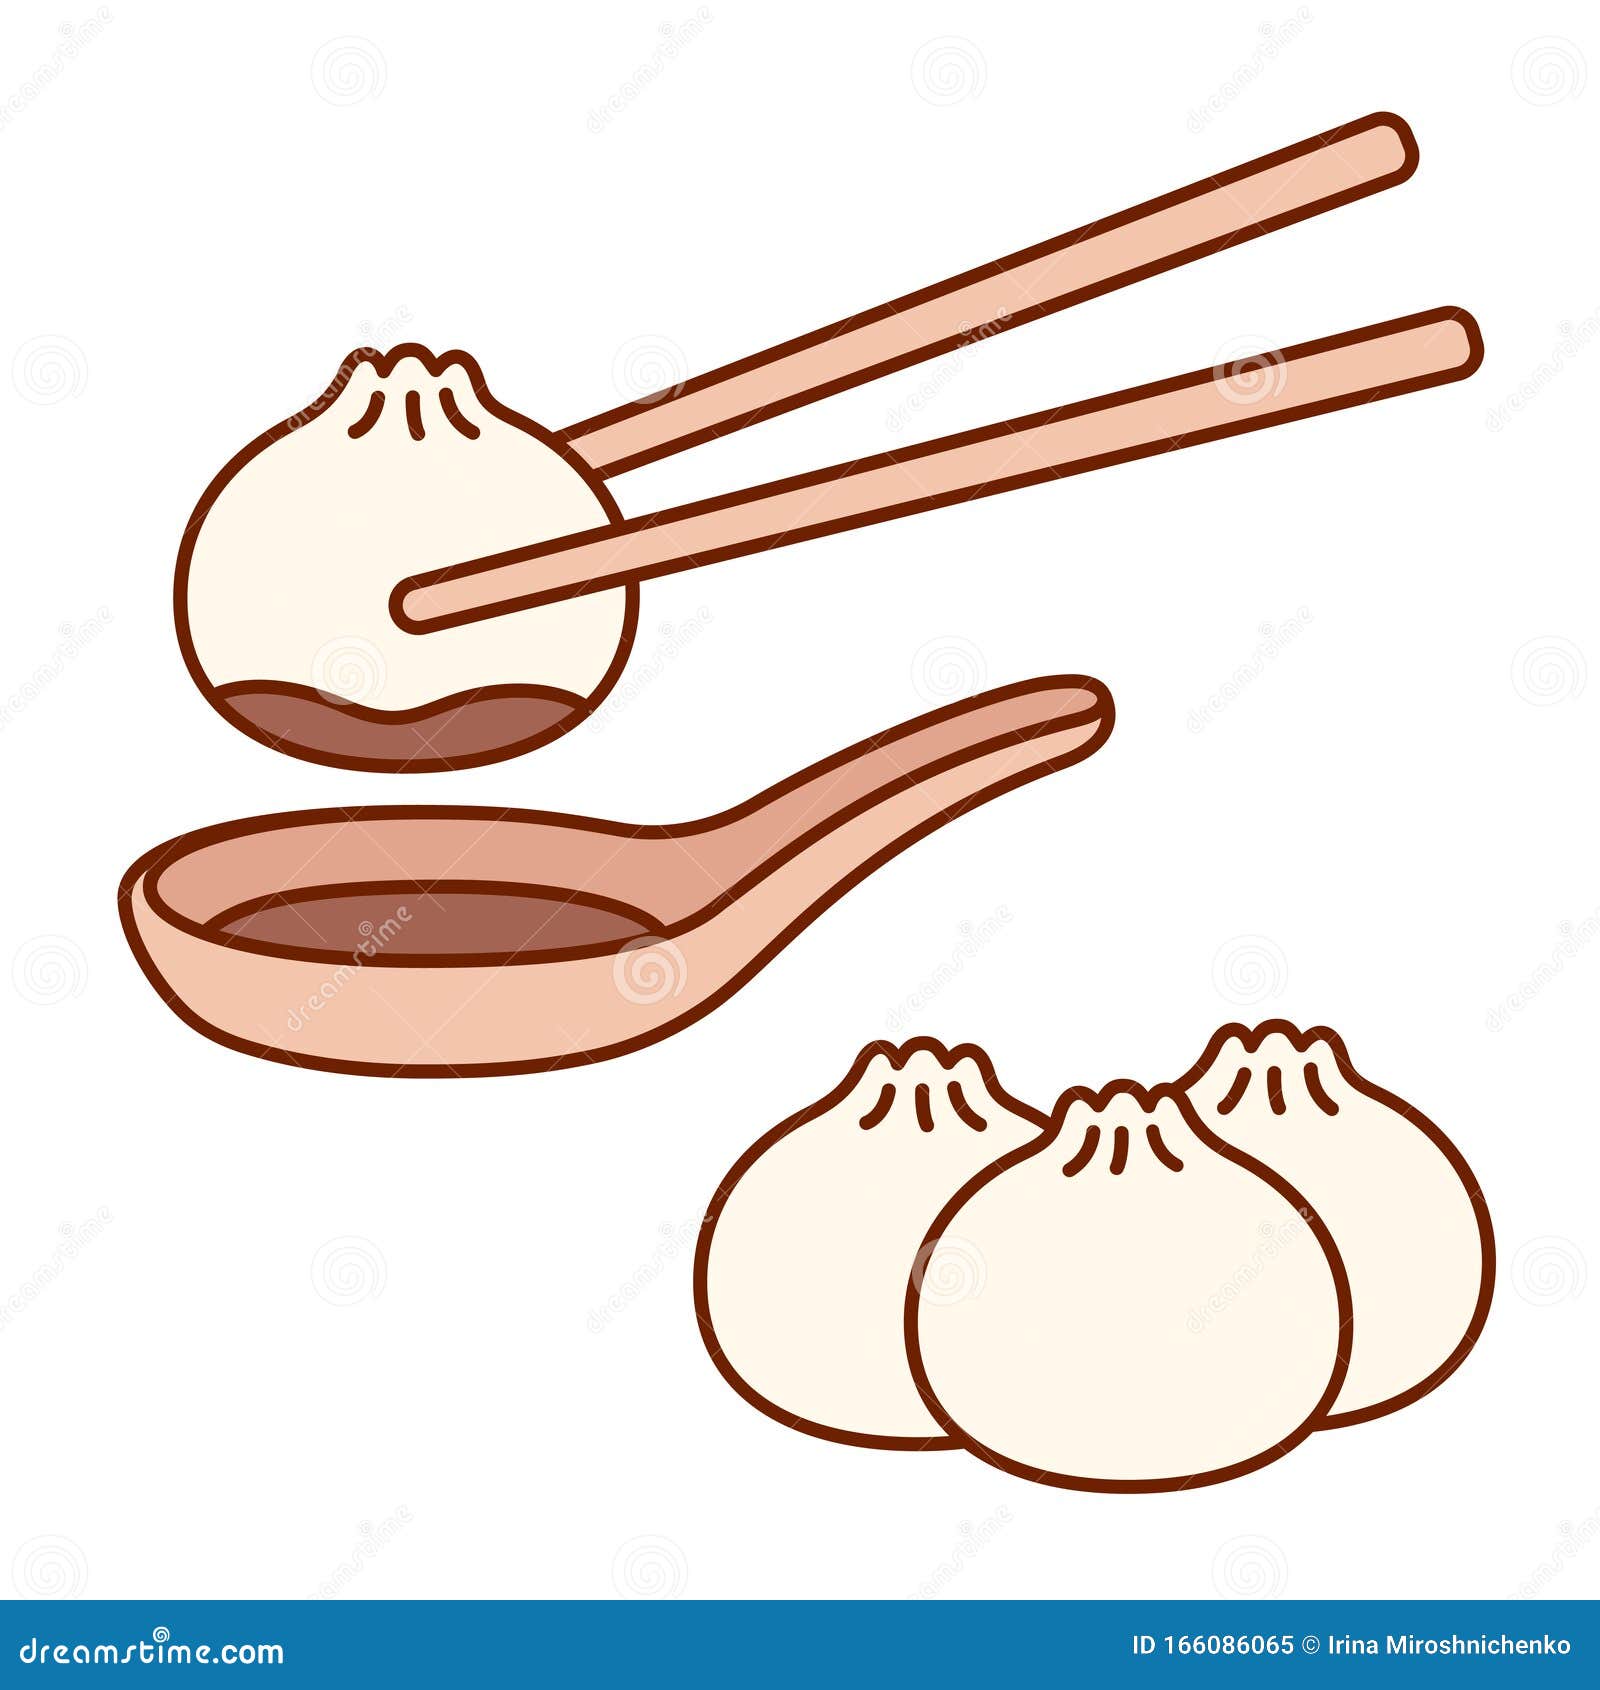 Cartoon dumplings drawing stock vector. Illustration of asian - 166086065